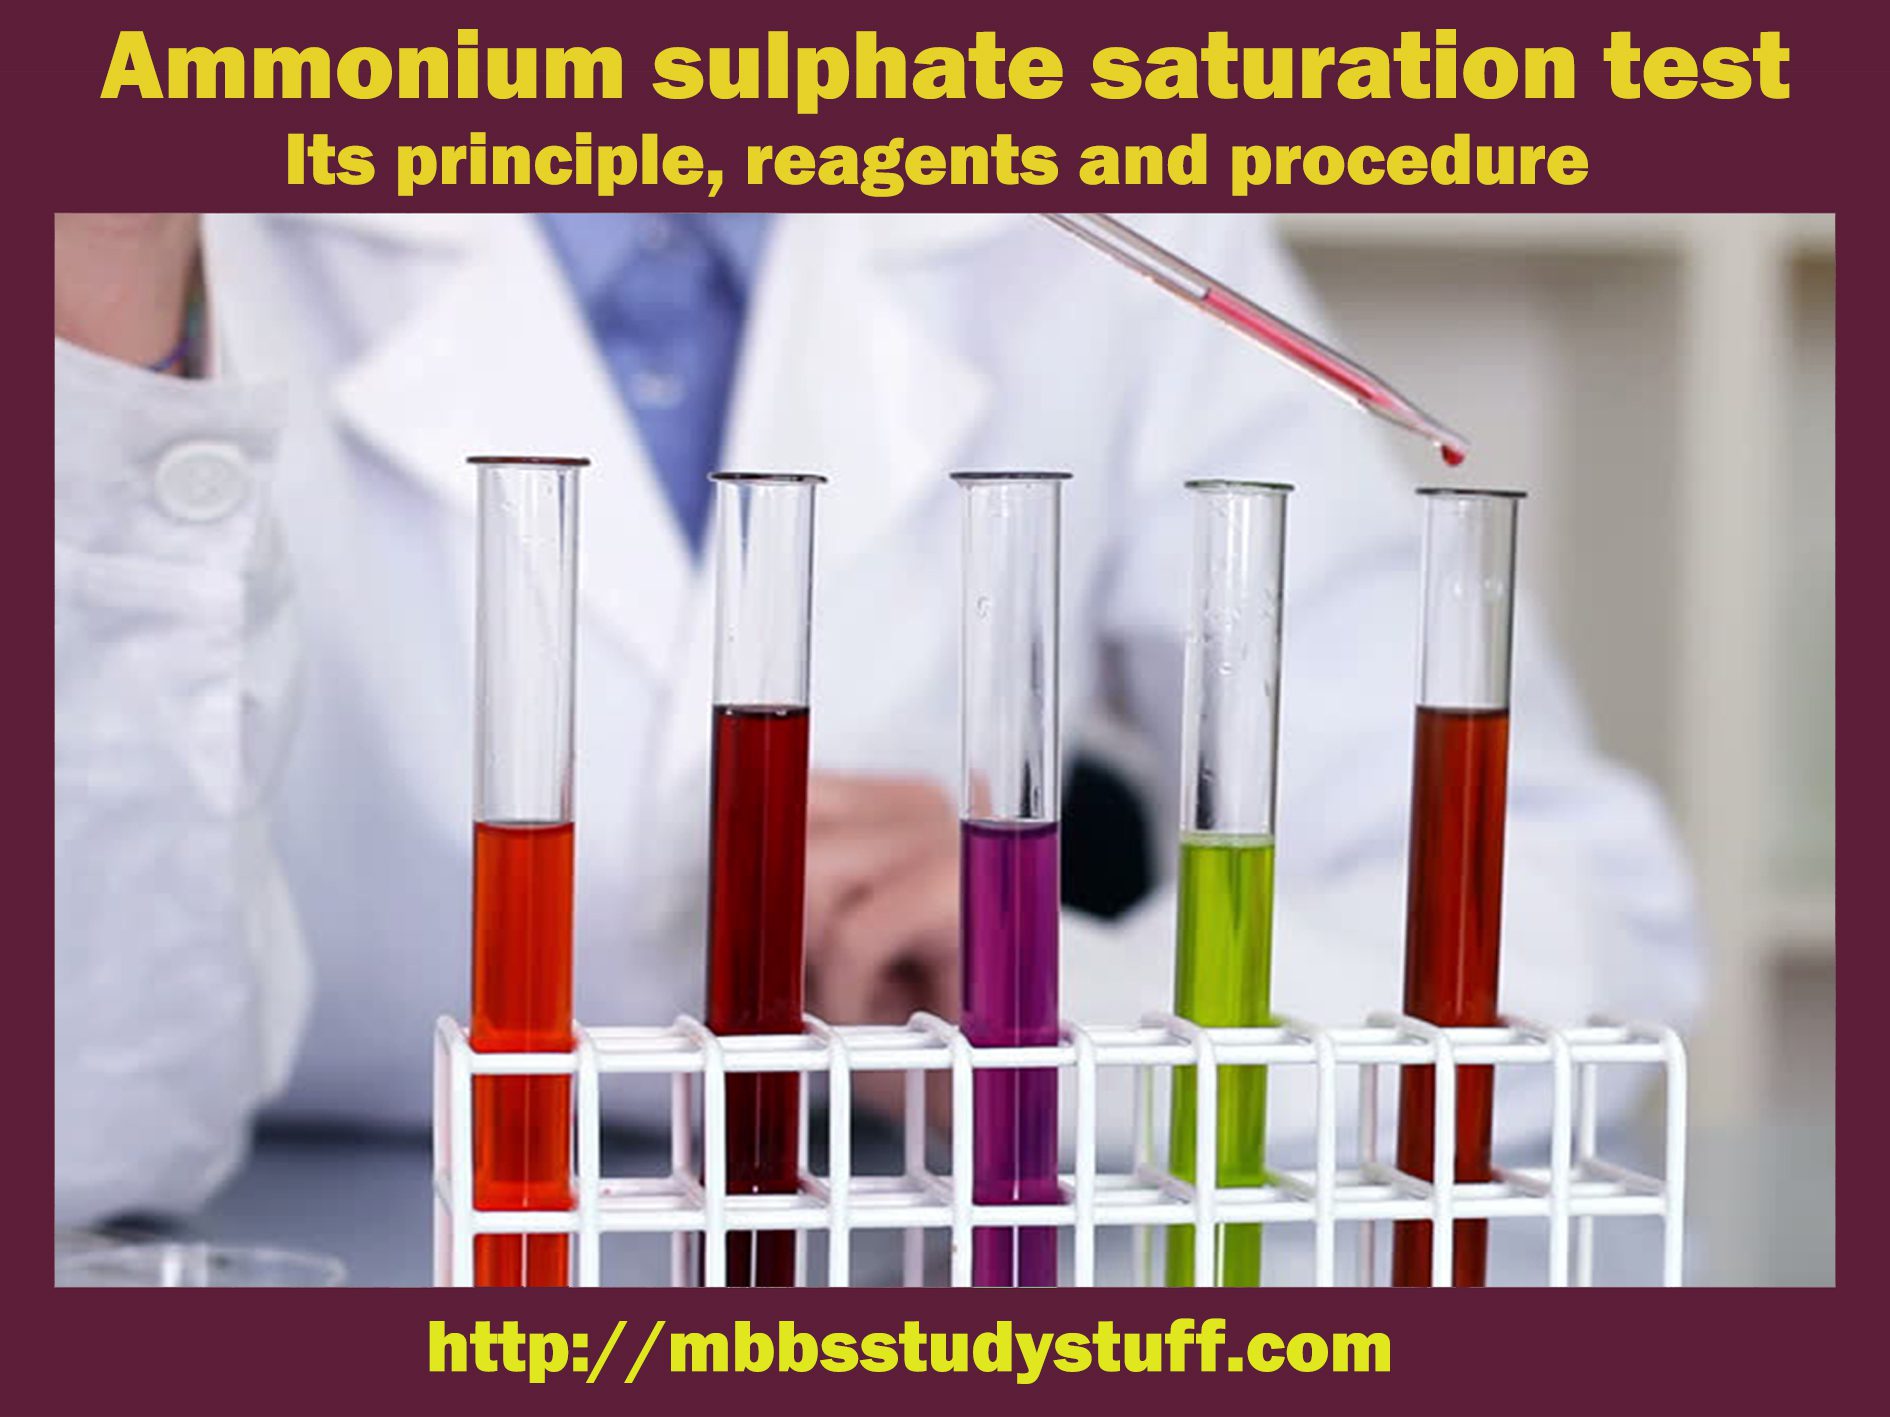 Ammonium sulphate saturation test